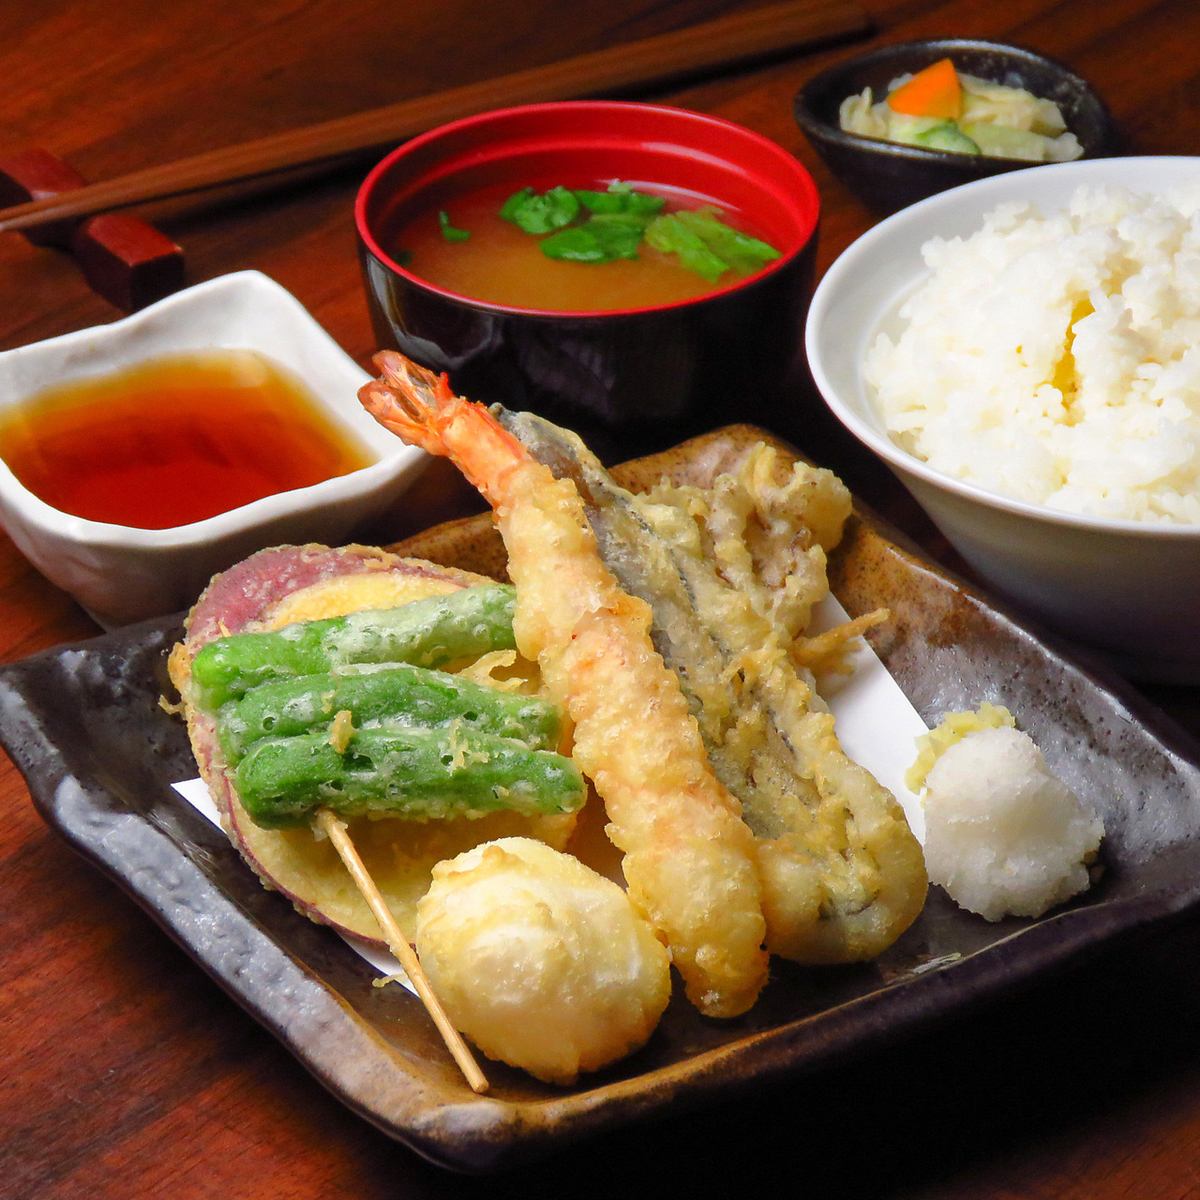 Enjoy a reasonably priced freshly fried tempura lunch.